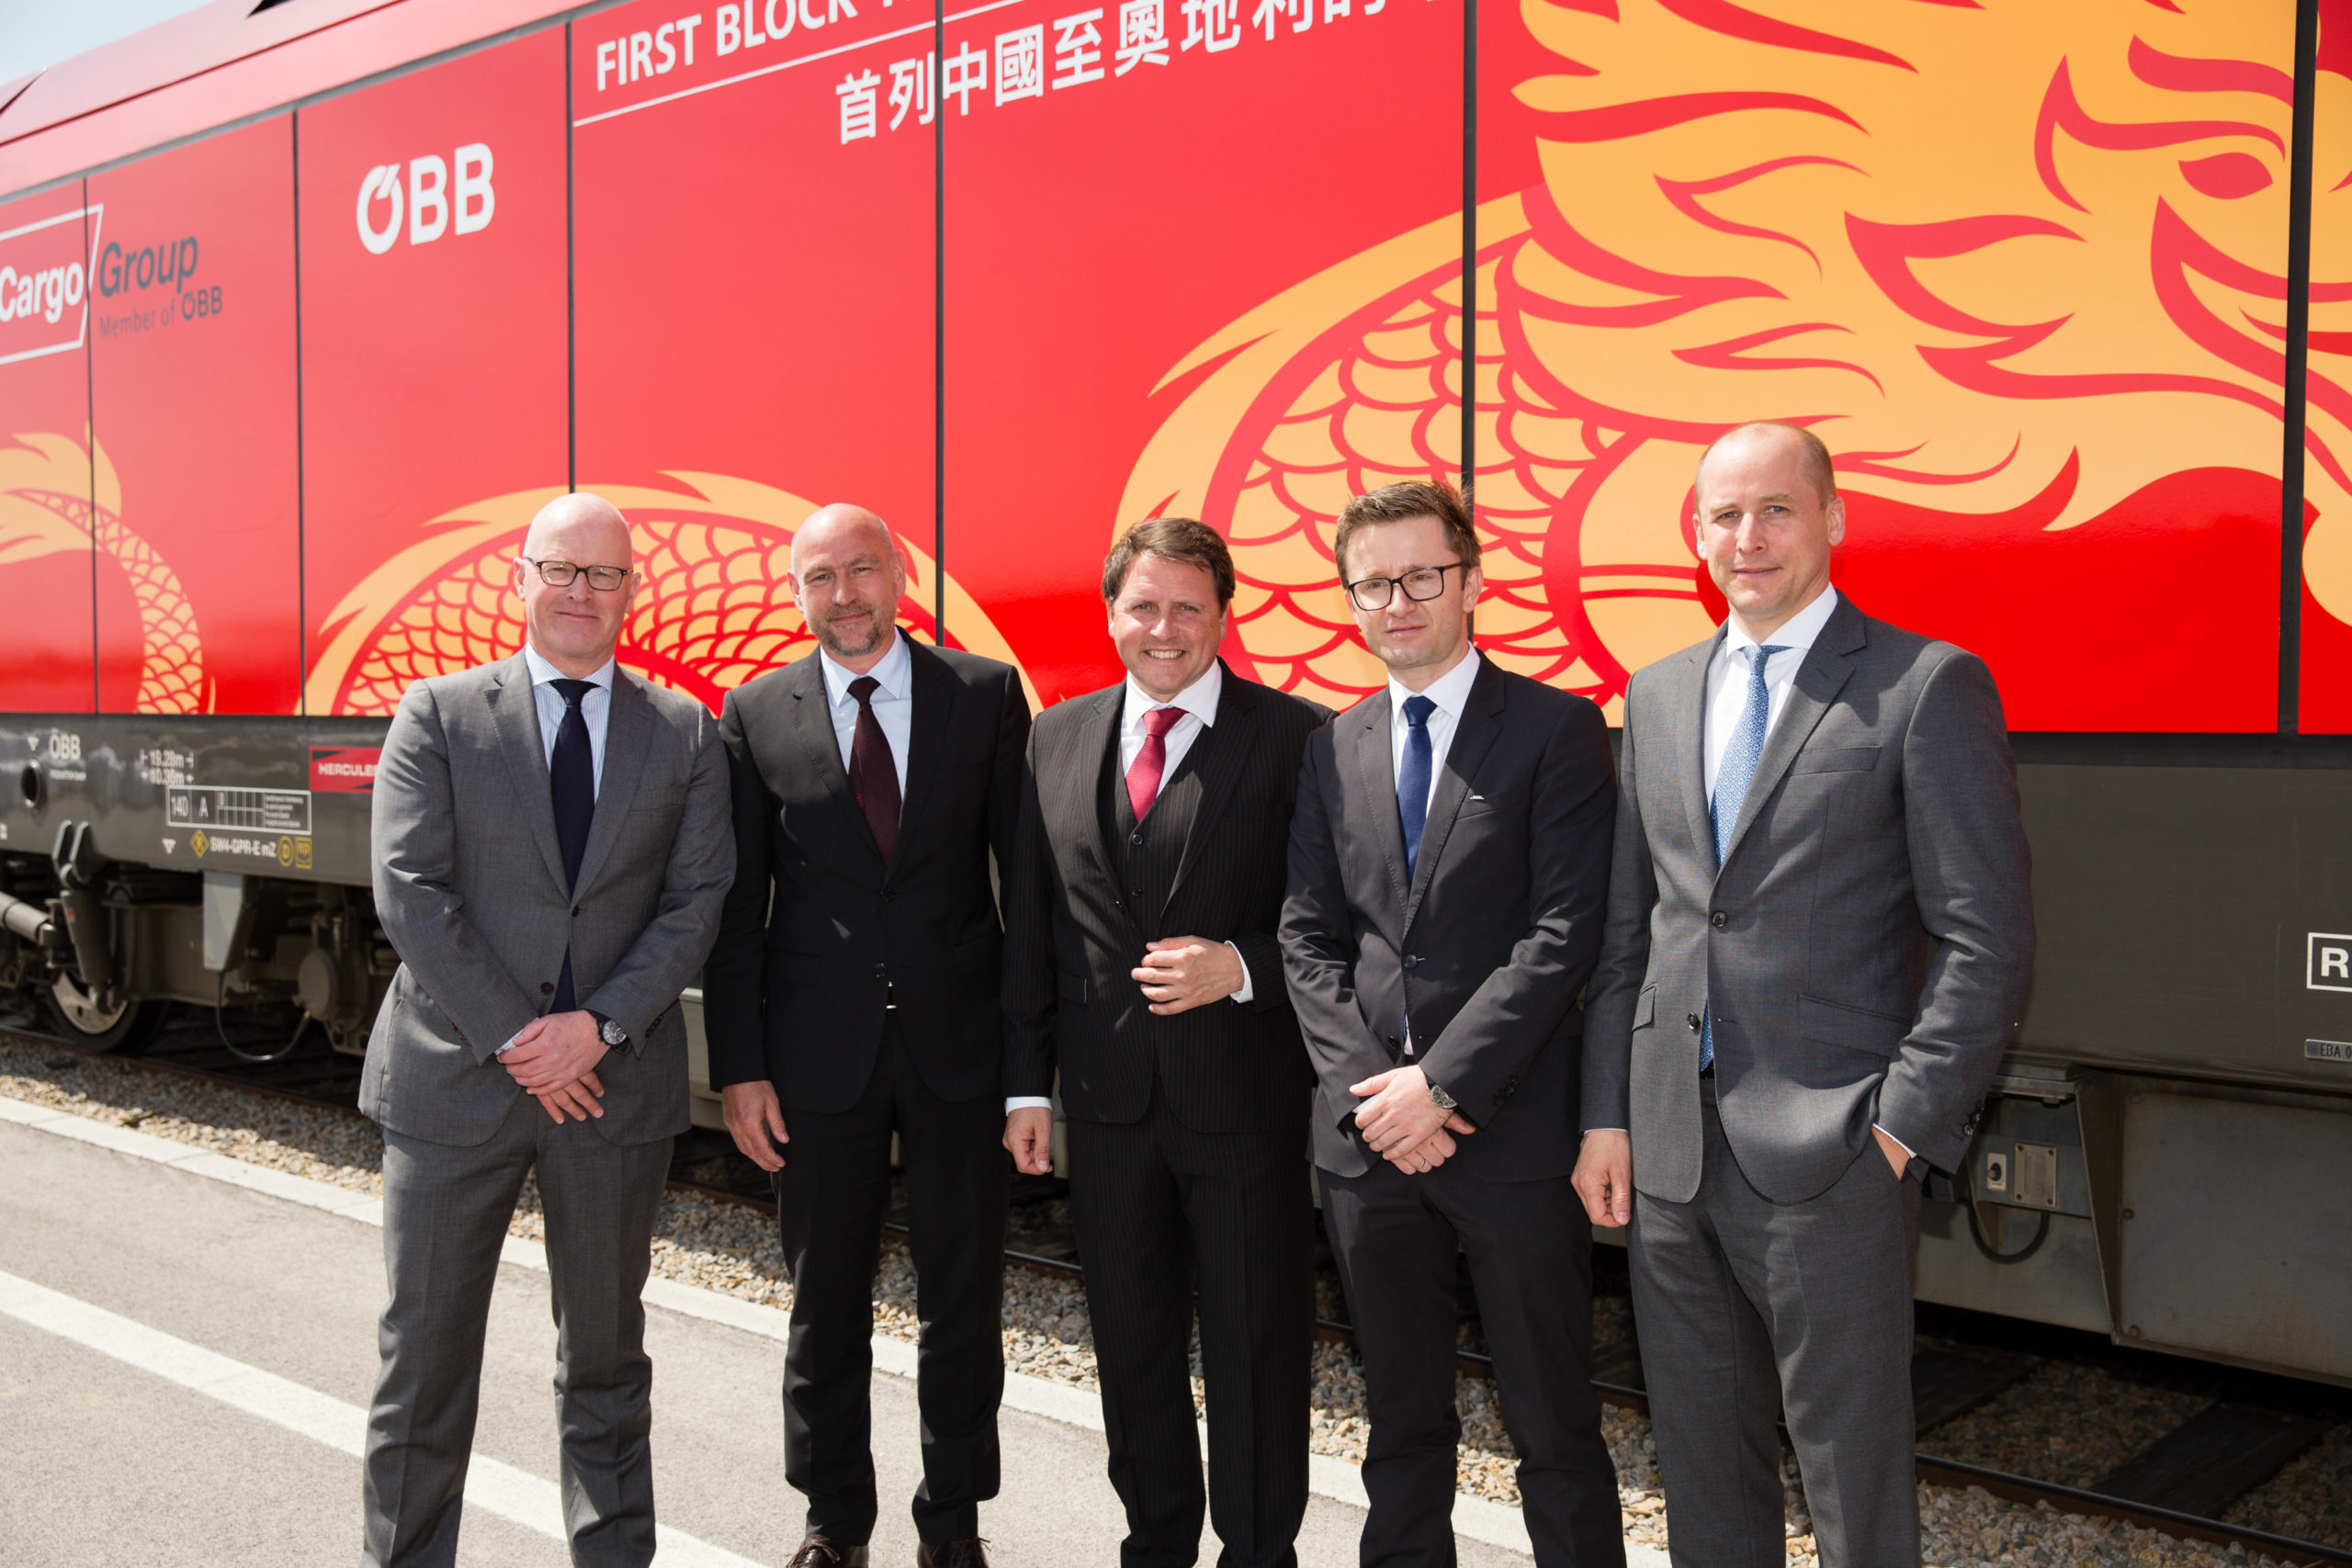 Left to right: Erik Regter (Member of the Board RCG), Thomas Kowitzki (Head of China Rail, Mulitmodal Europe, DHL Global Forwarding), Thomas Kargl (Member of the Board RCG), Christoph Wahl (Managing Director Austria, DHL Global Forwarding) und Clemens Först (Spokesperson of the Board RCG)